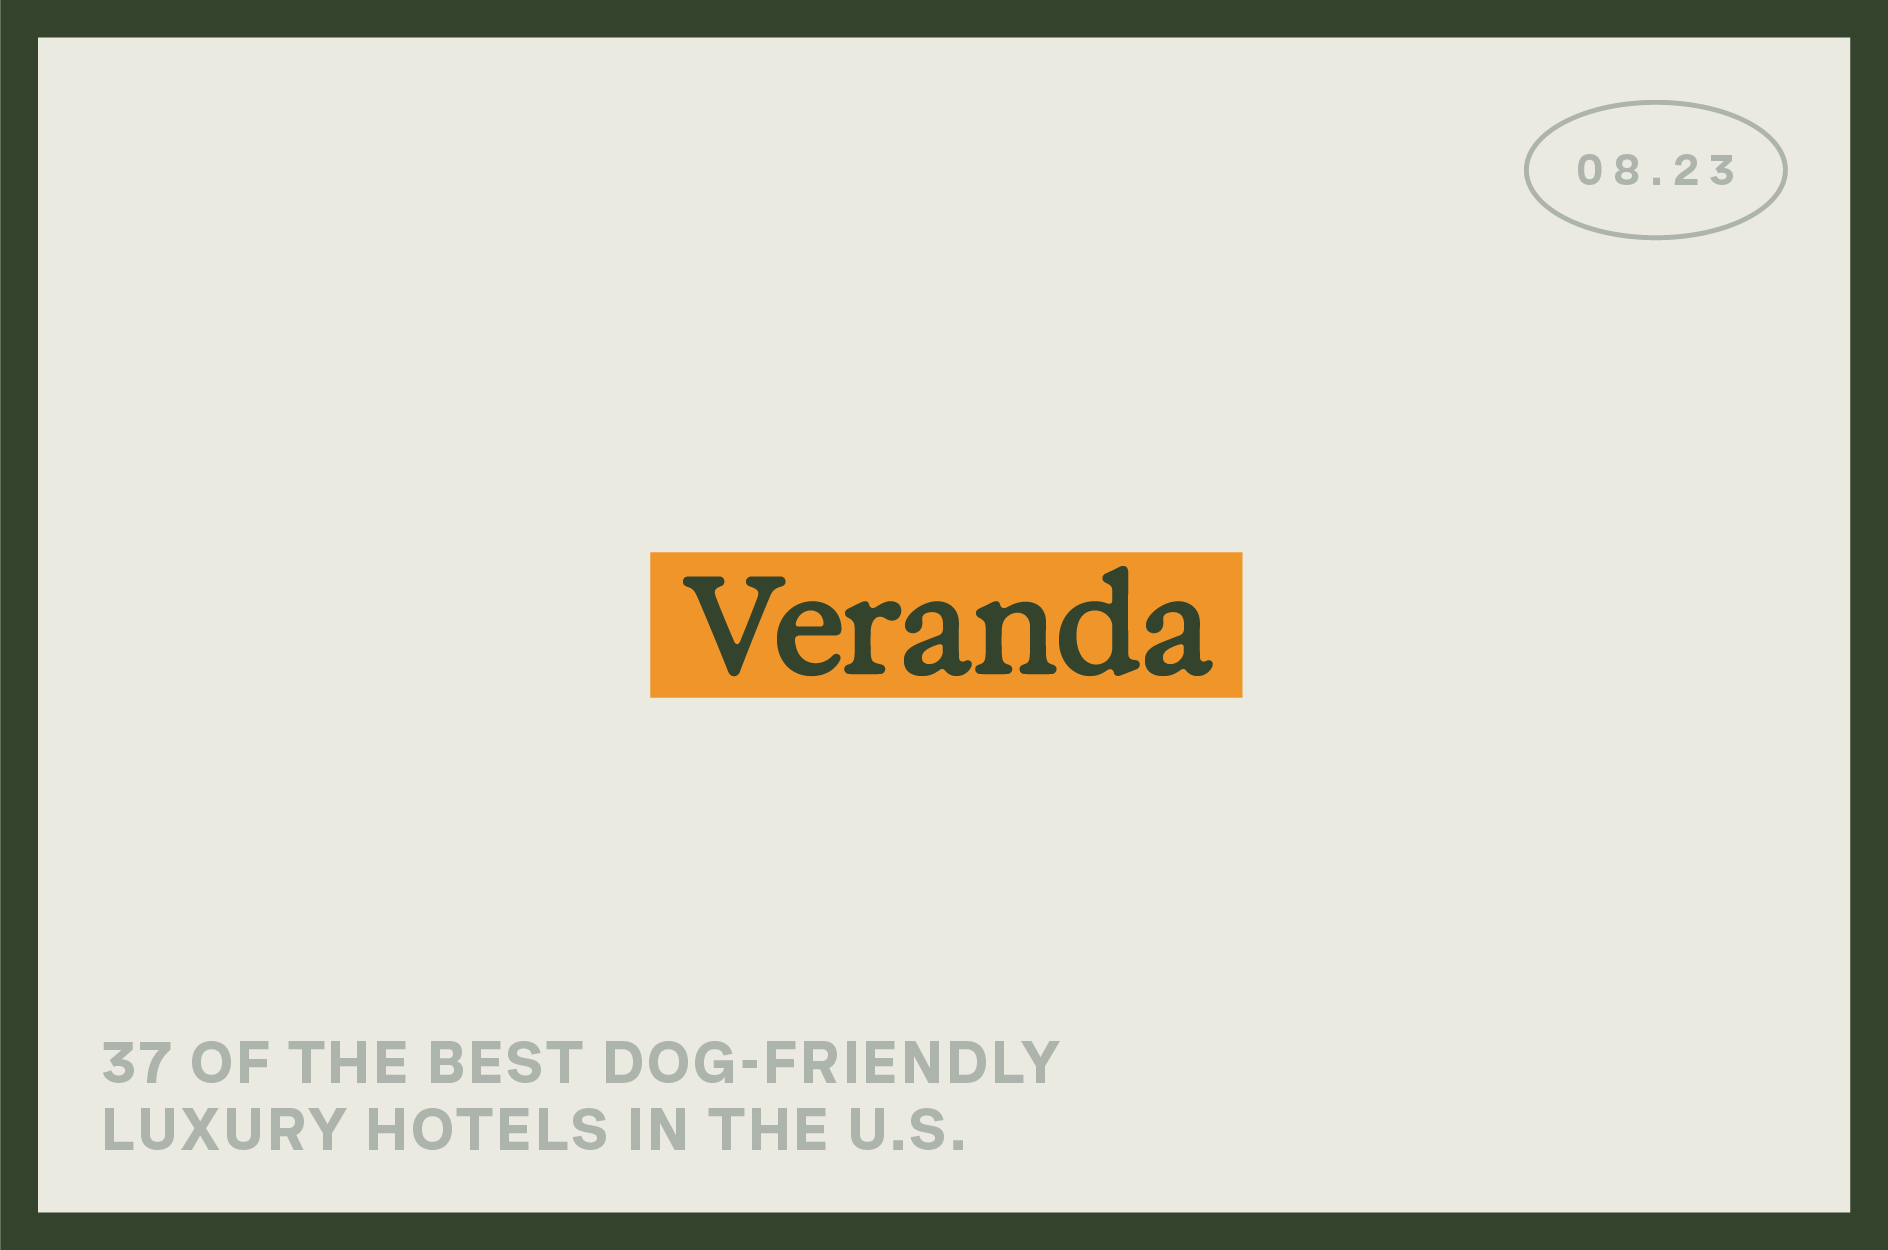 "Veranda" banner showcases "37 of the best dog-friendly luxury hotels in the U.S."